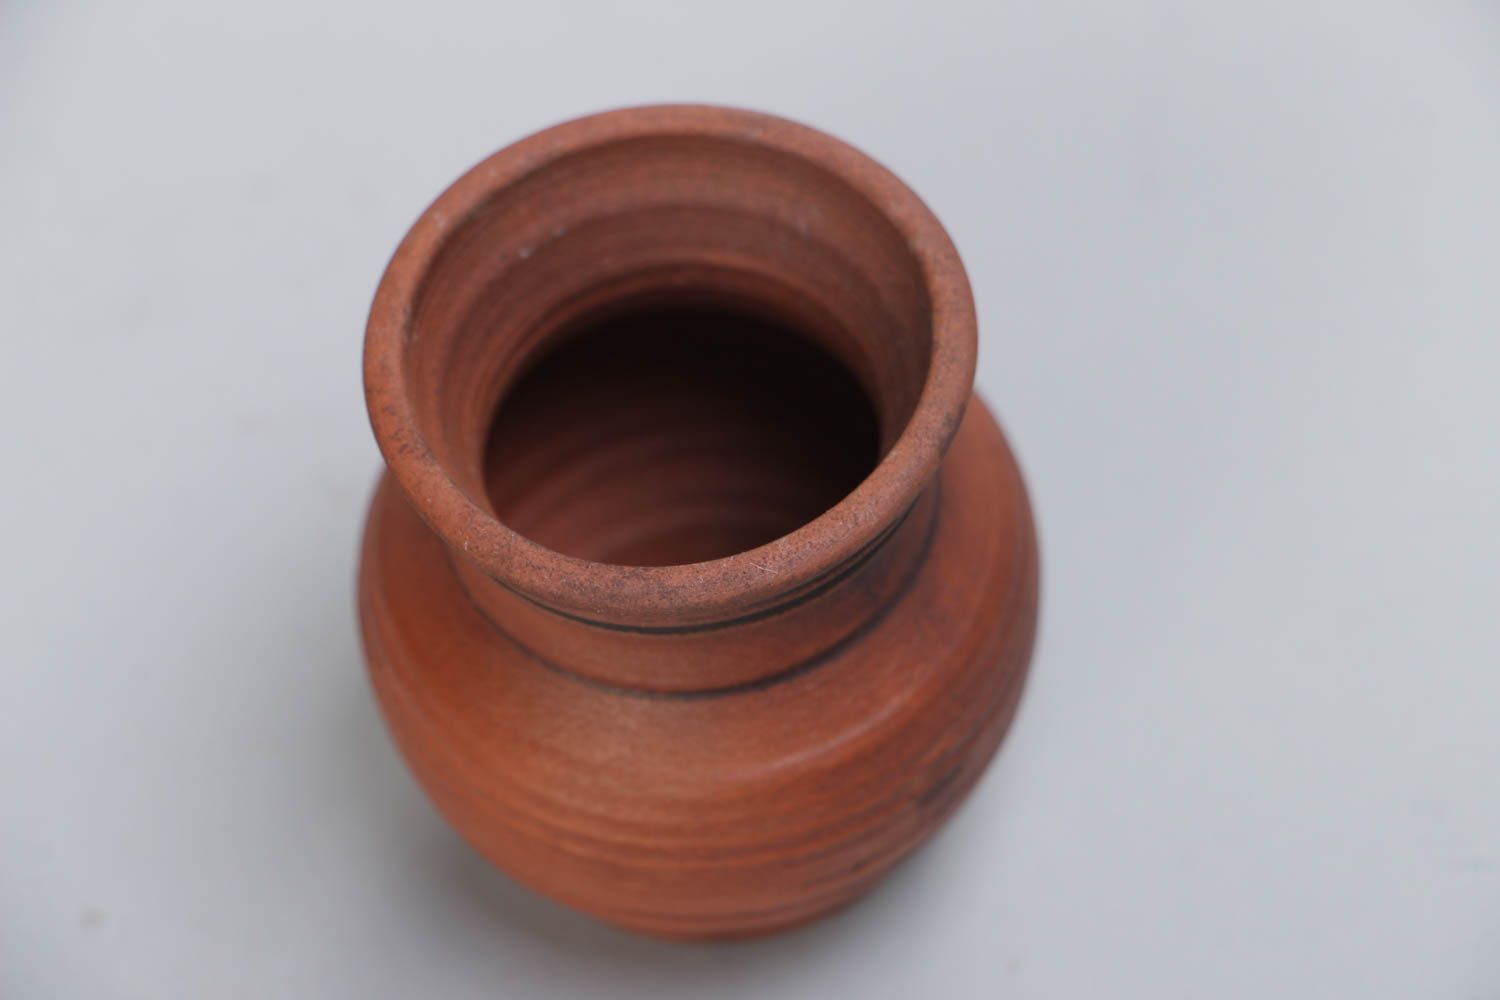 10 oz ceramic creamer jug in terracotta color 0,13 lb photo 3